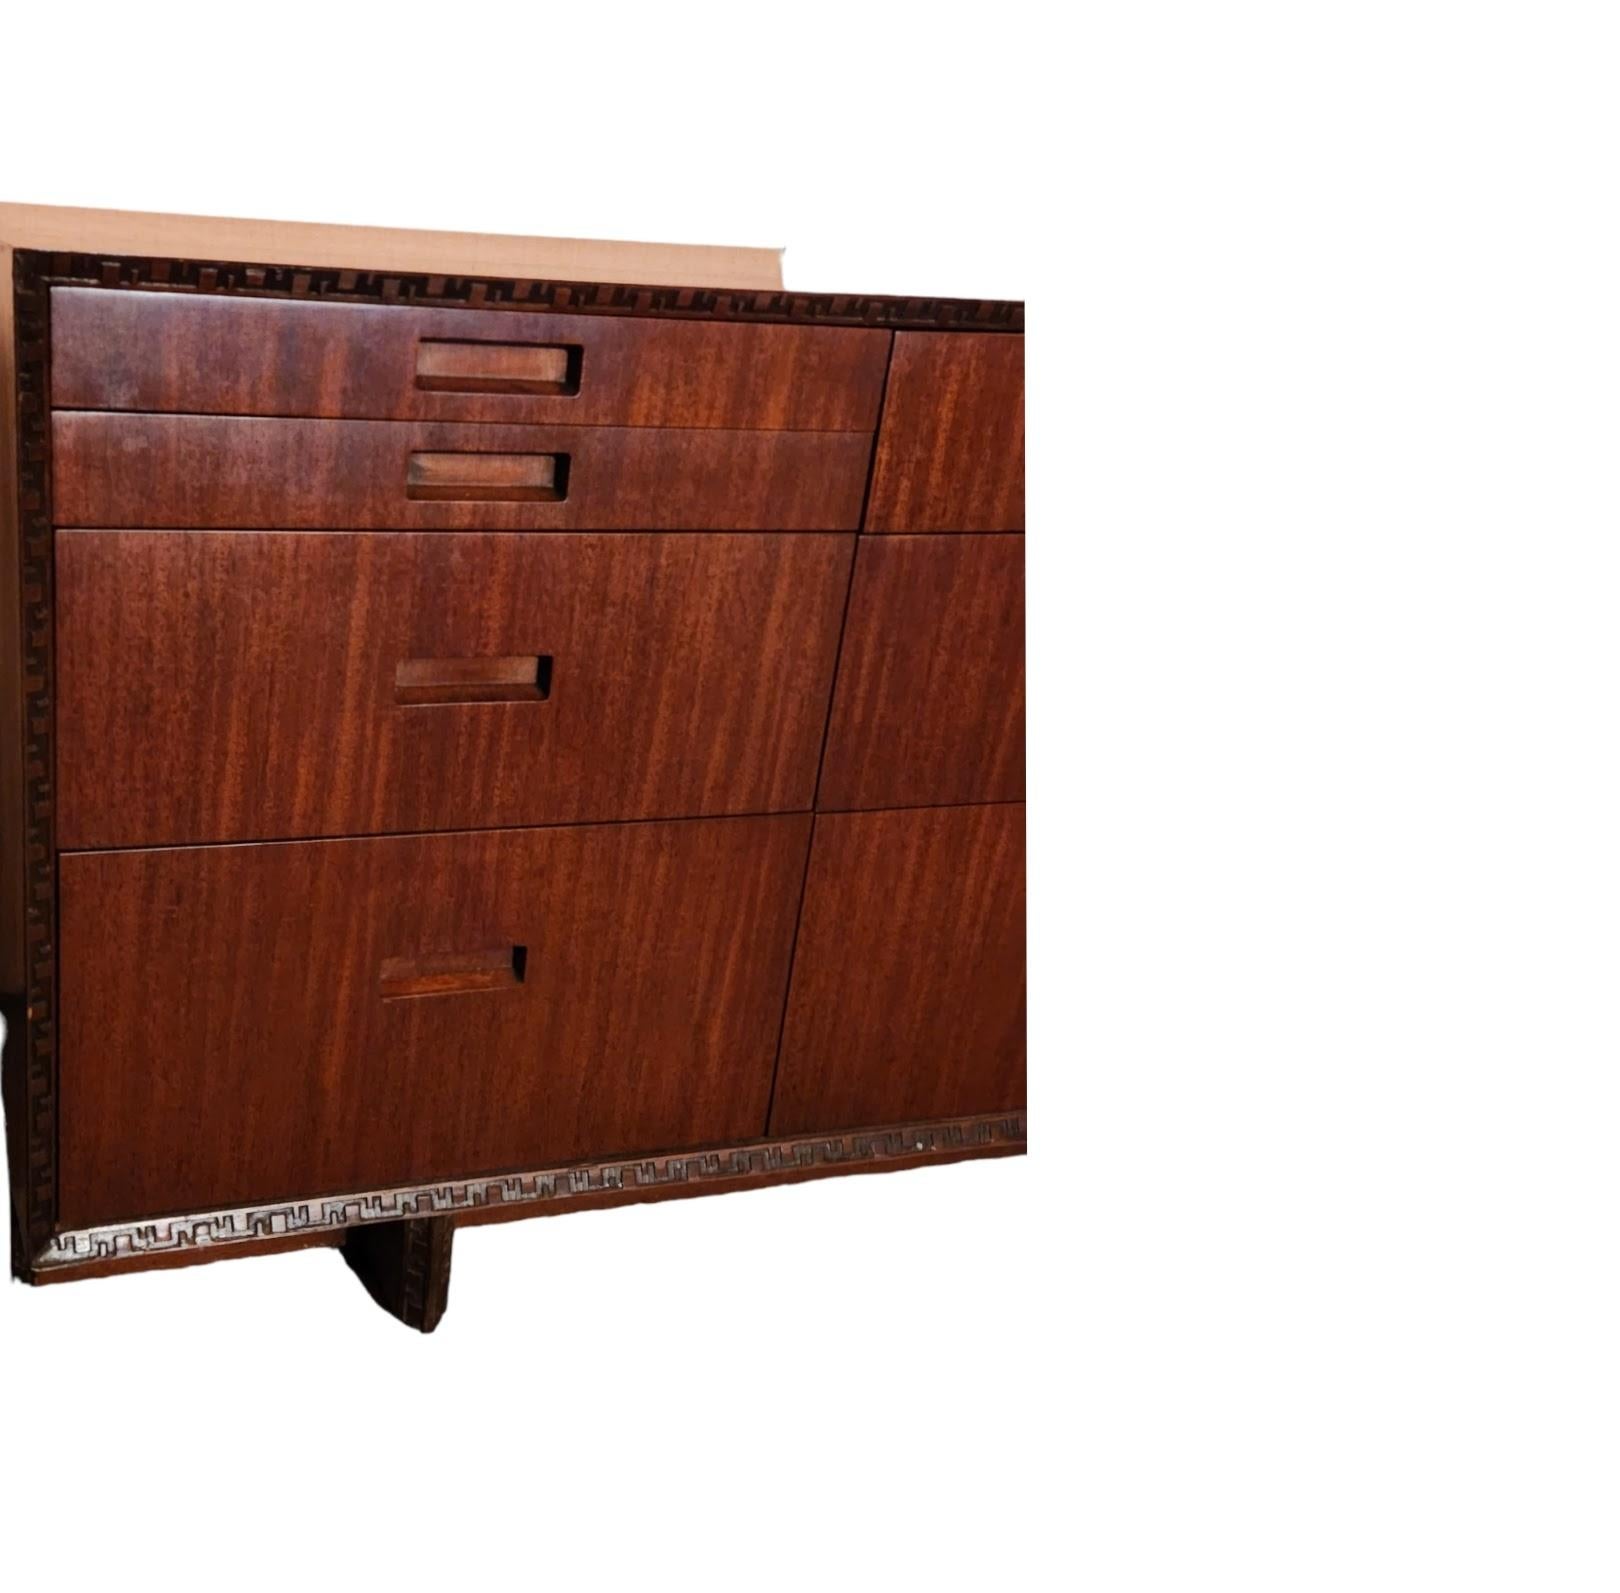 Carved Frank Lloyd Wright Mahogany Dresser Sideboard Taliesin Heritage Henredon 1955 For Sale